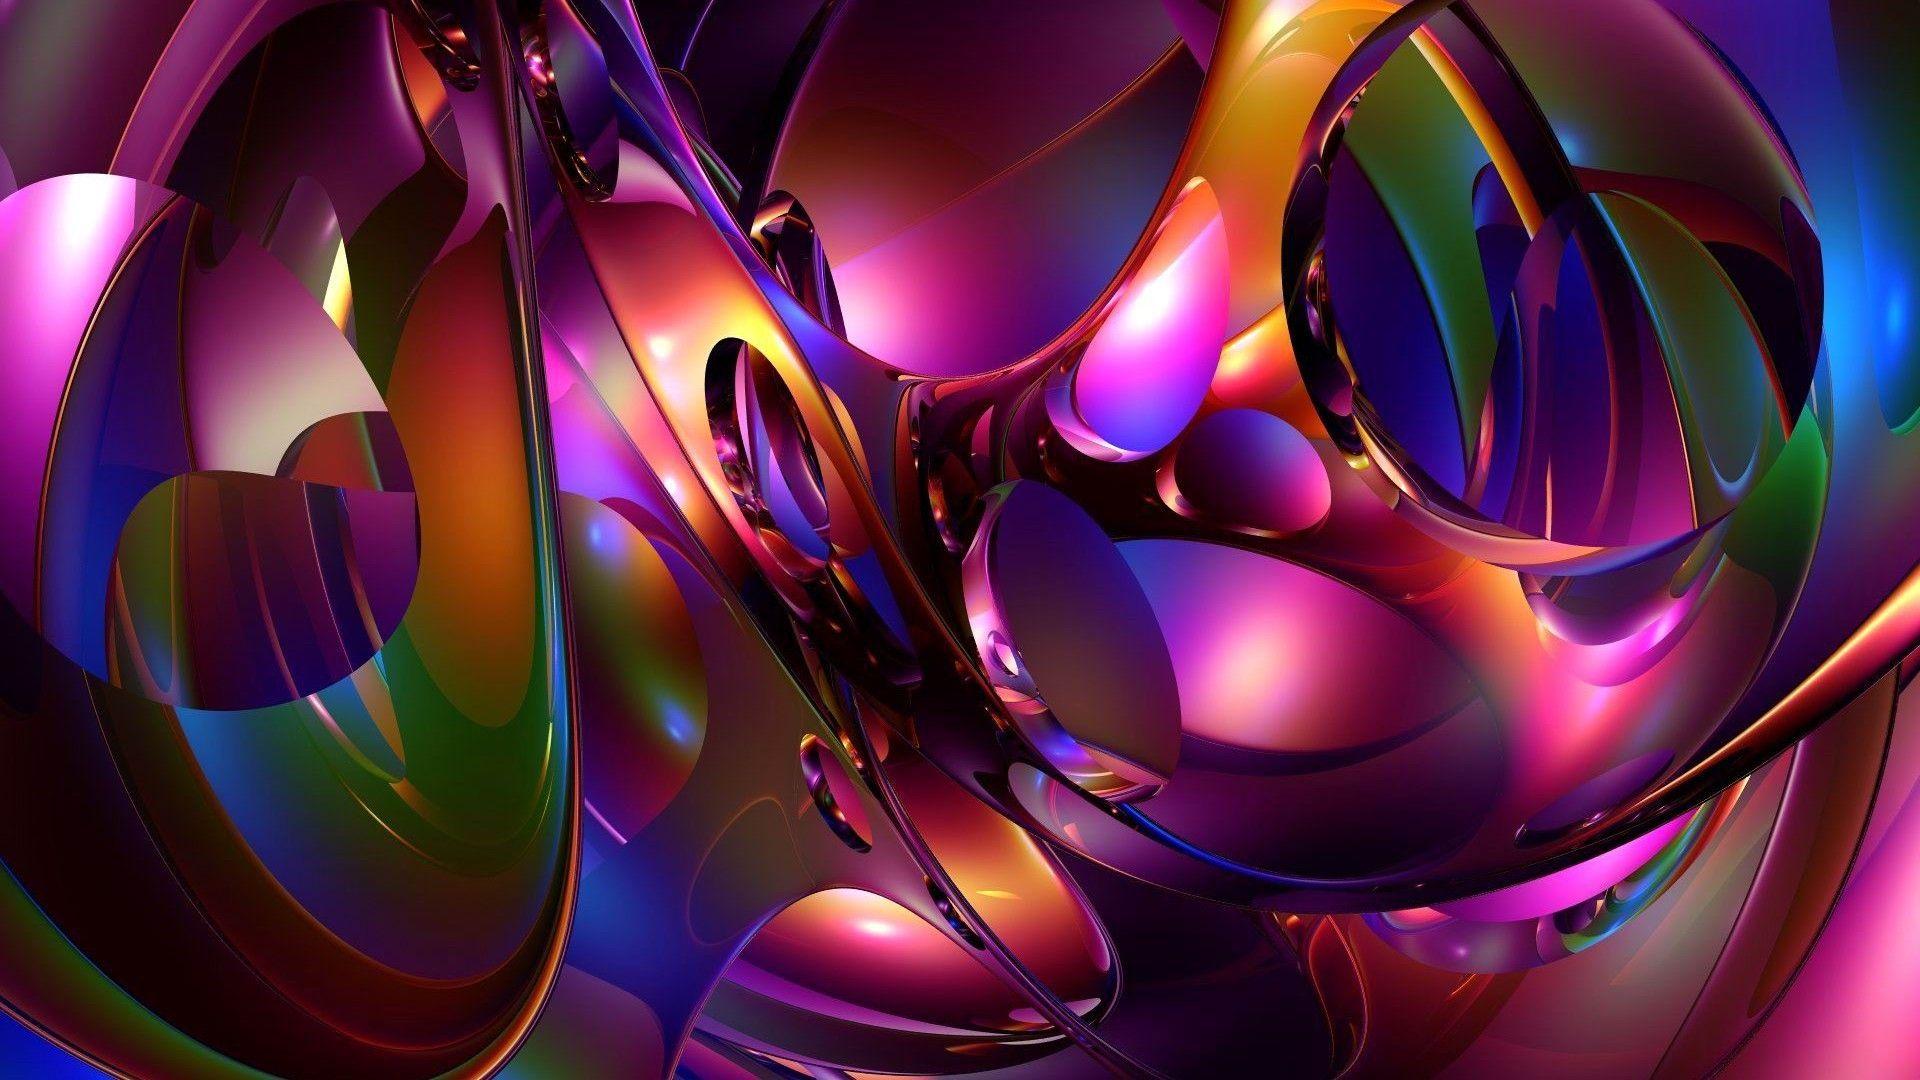 Cool Abstract Desktop Wallpapers - Top Free Cool Abstract Desktop